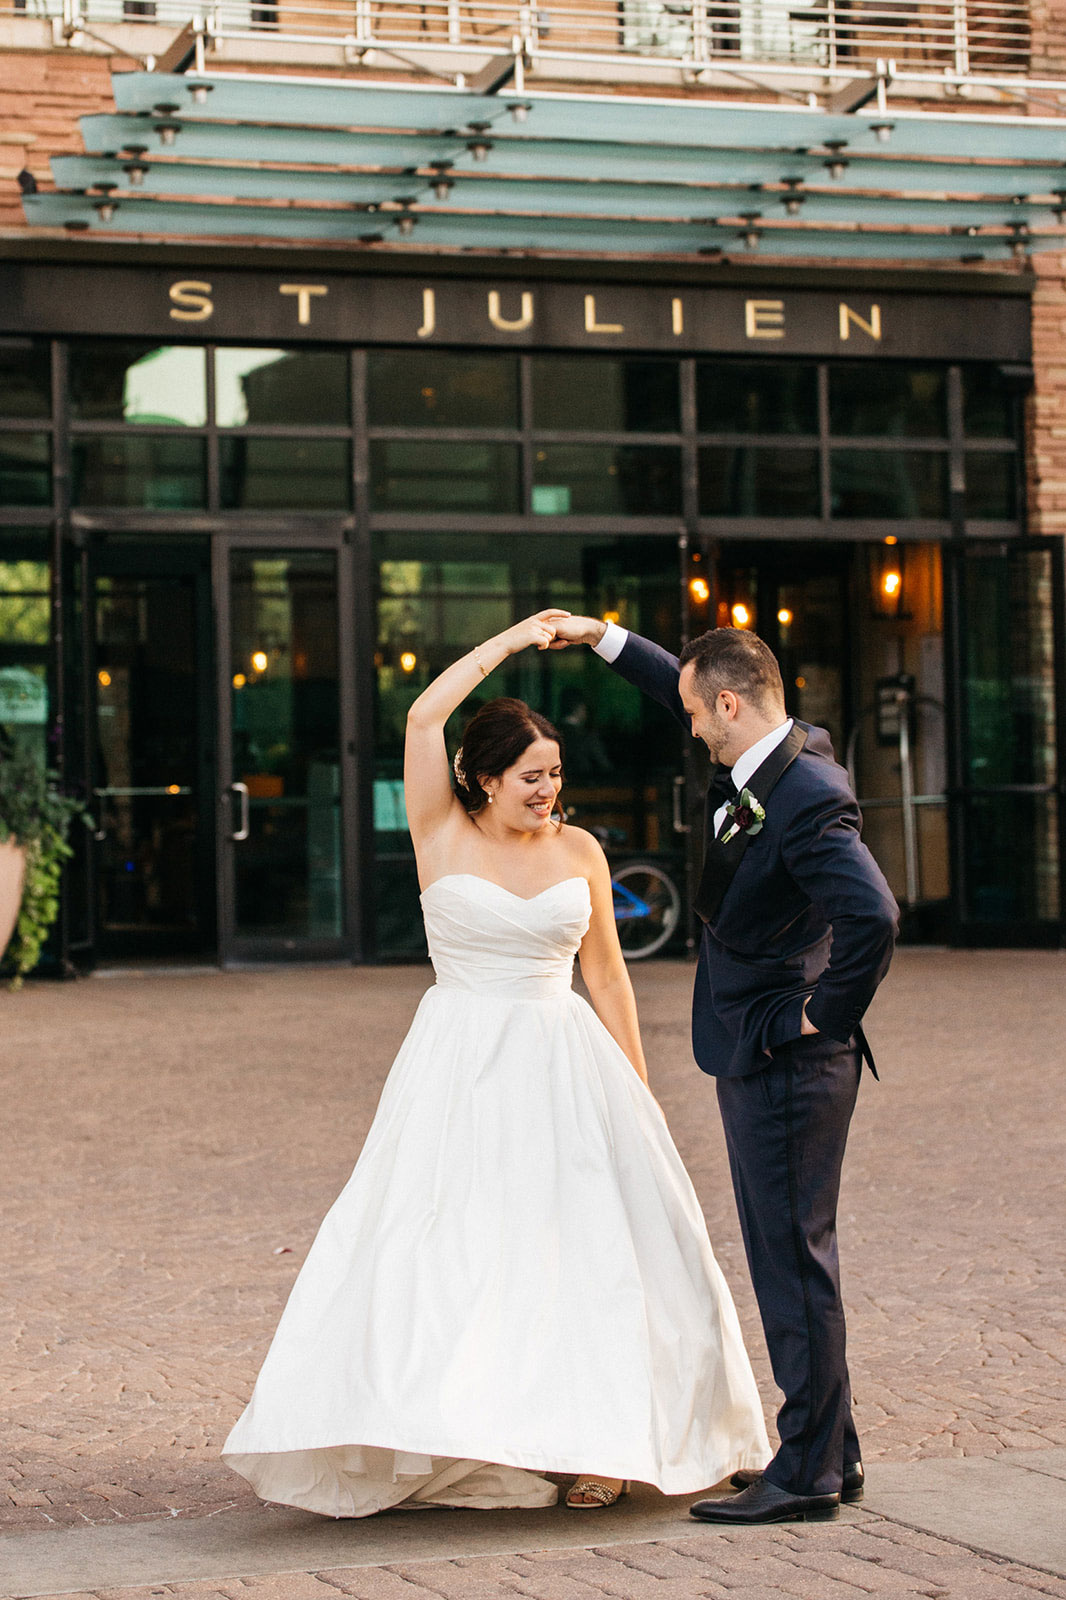 groom and bride dancing in front of st julien hotel entrance